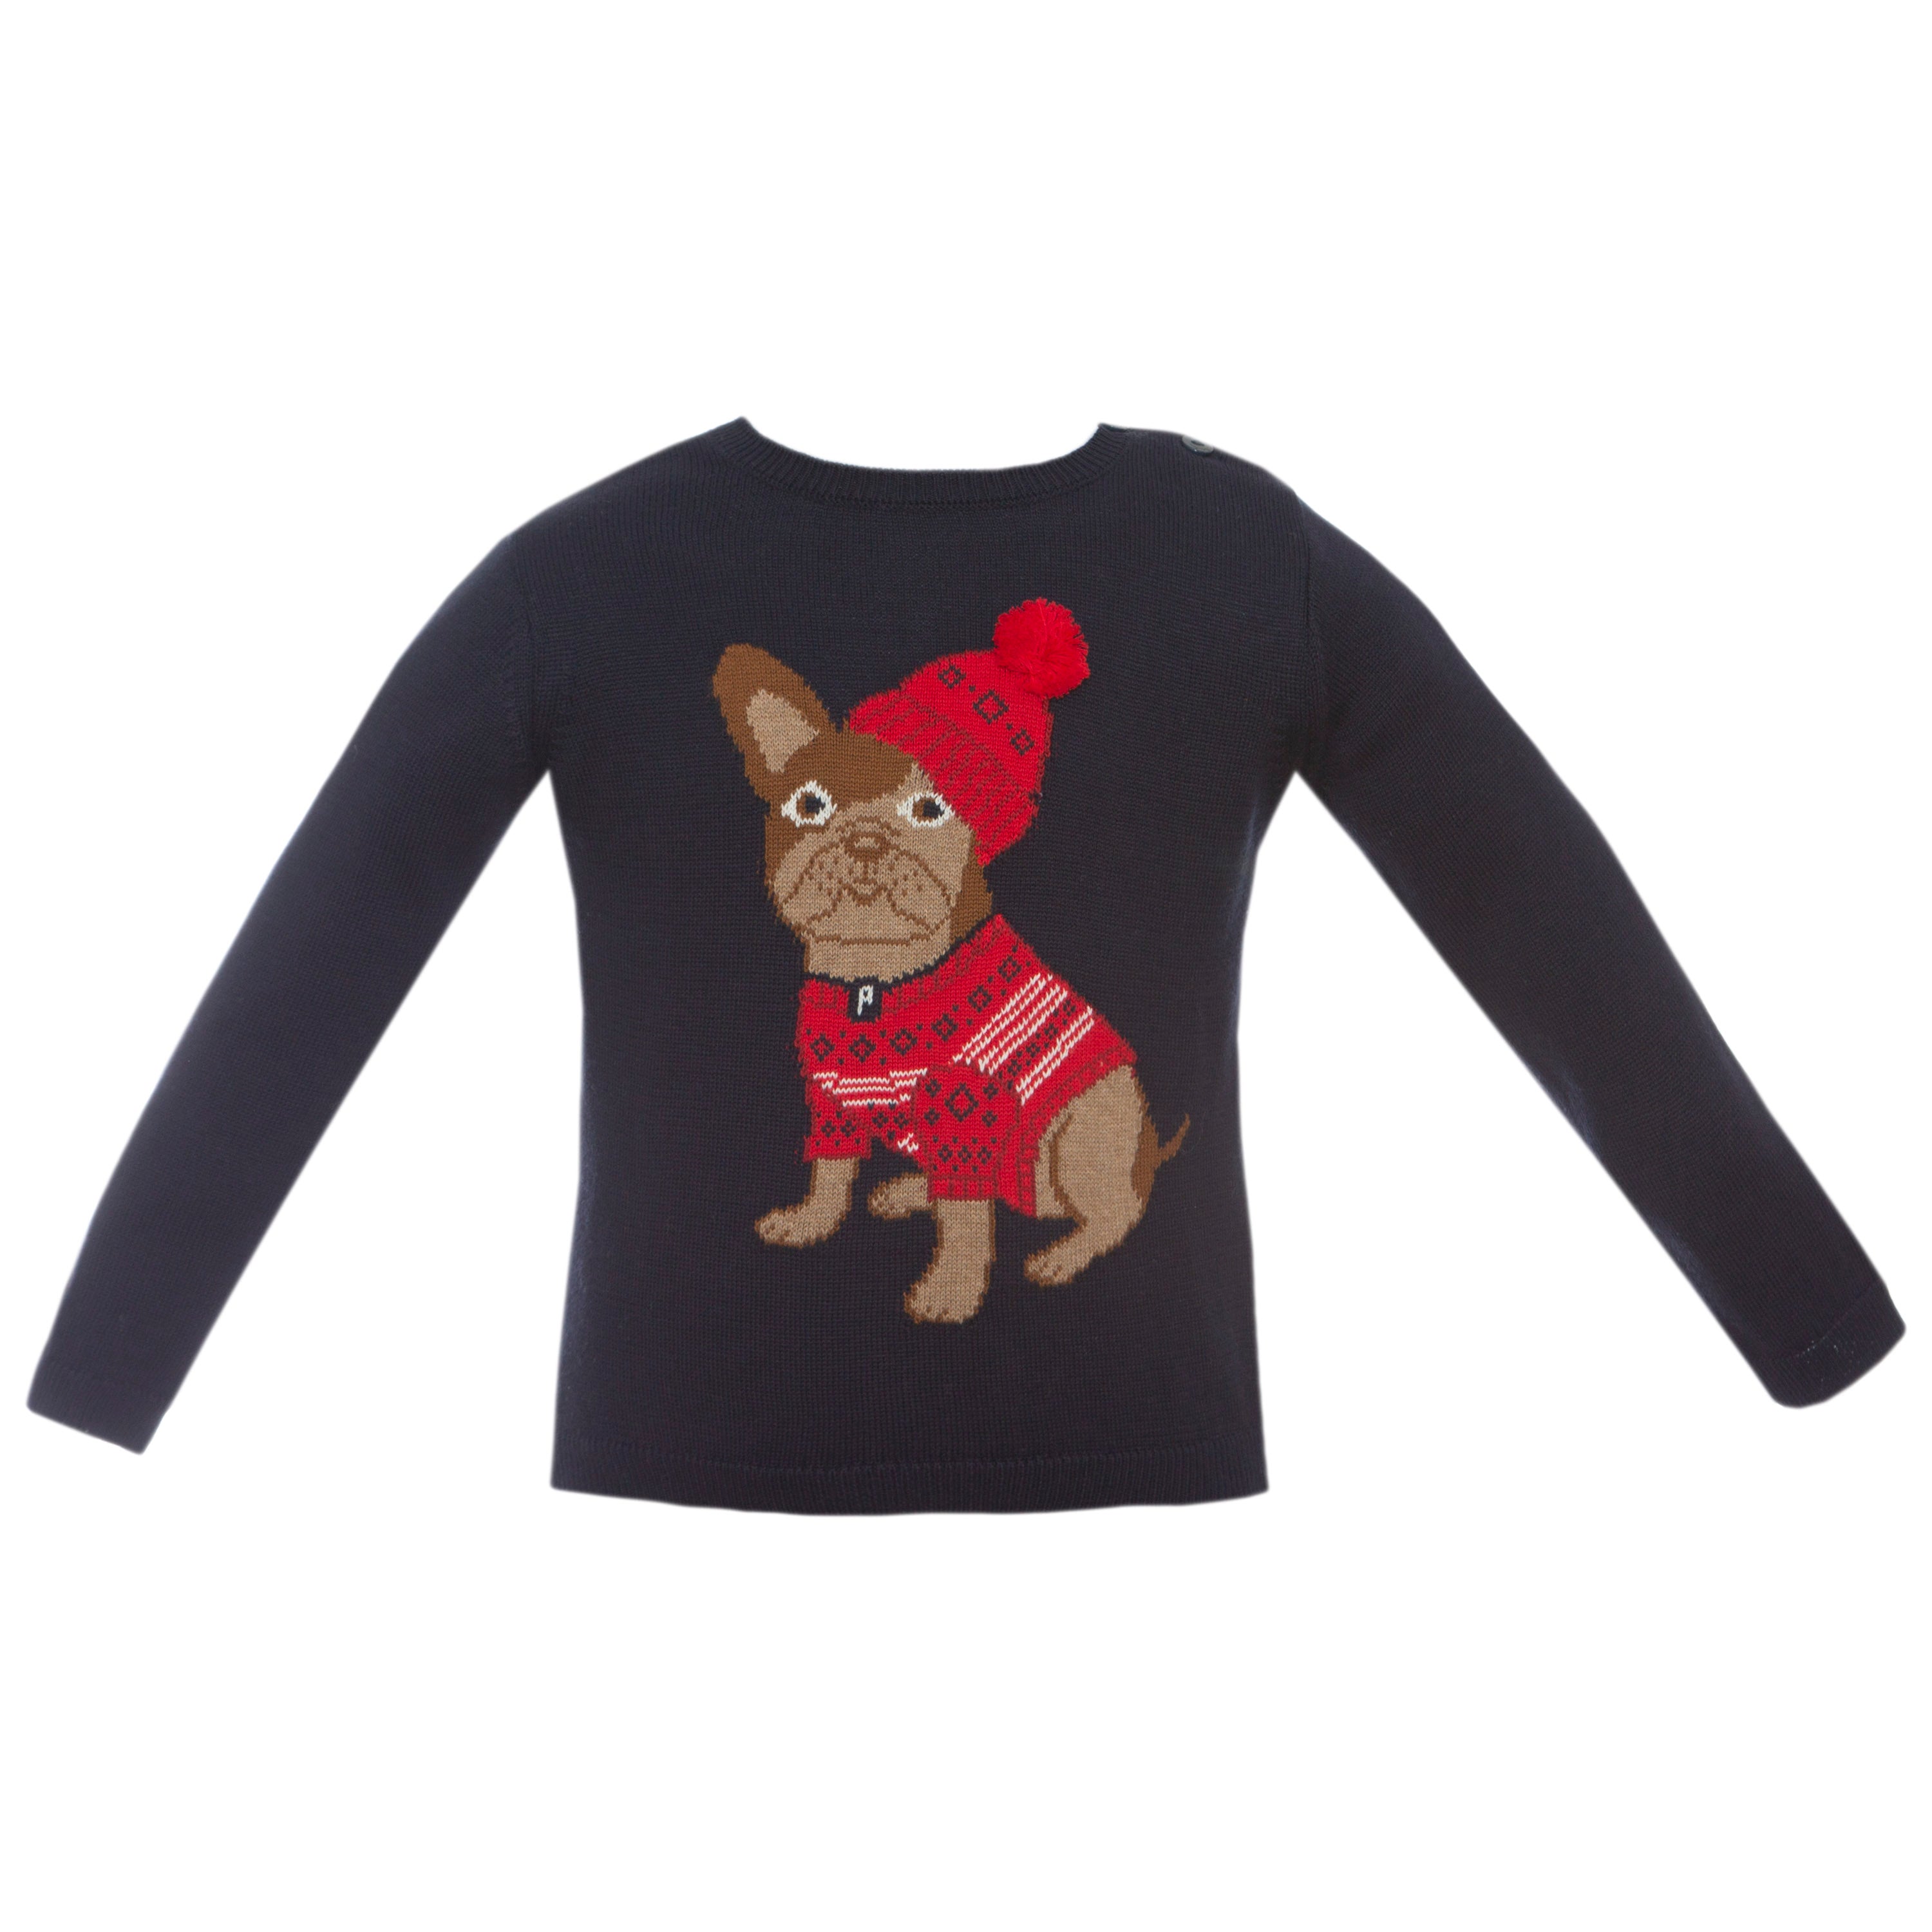 Patachou baby french bulldog holiday sweater